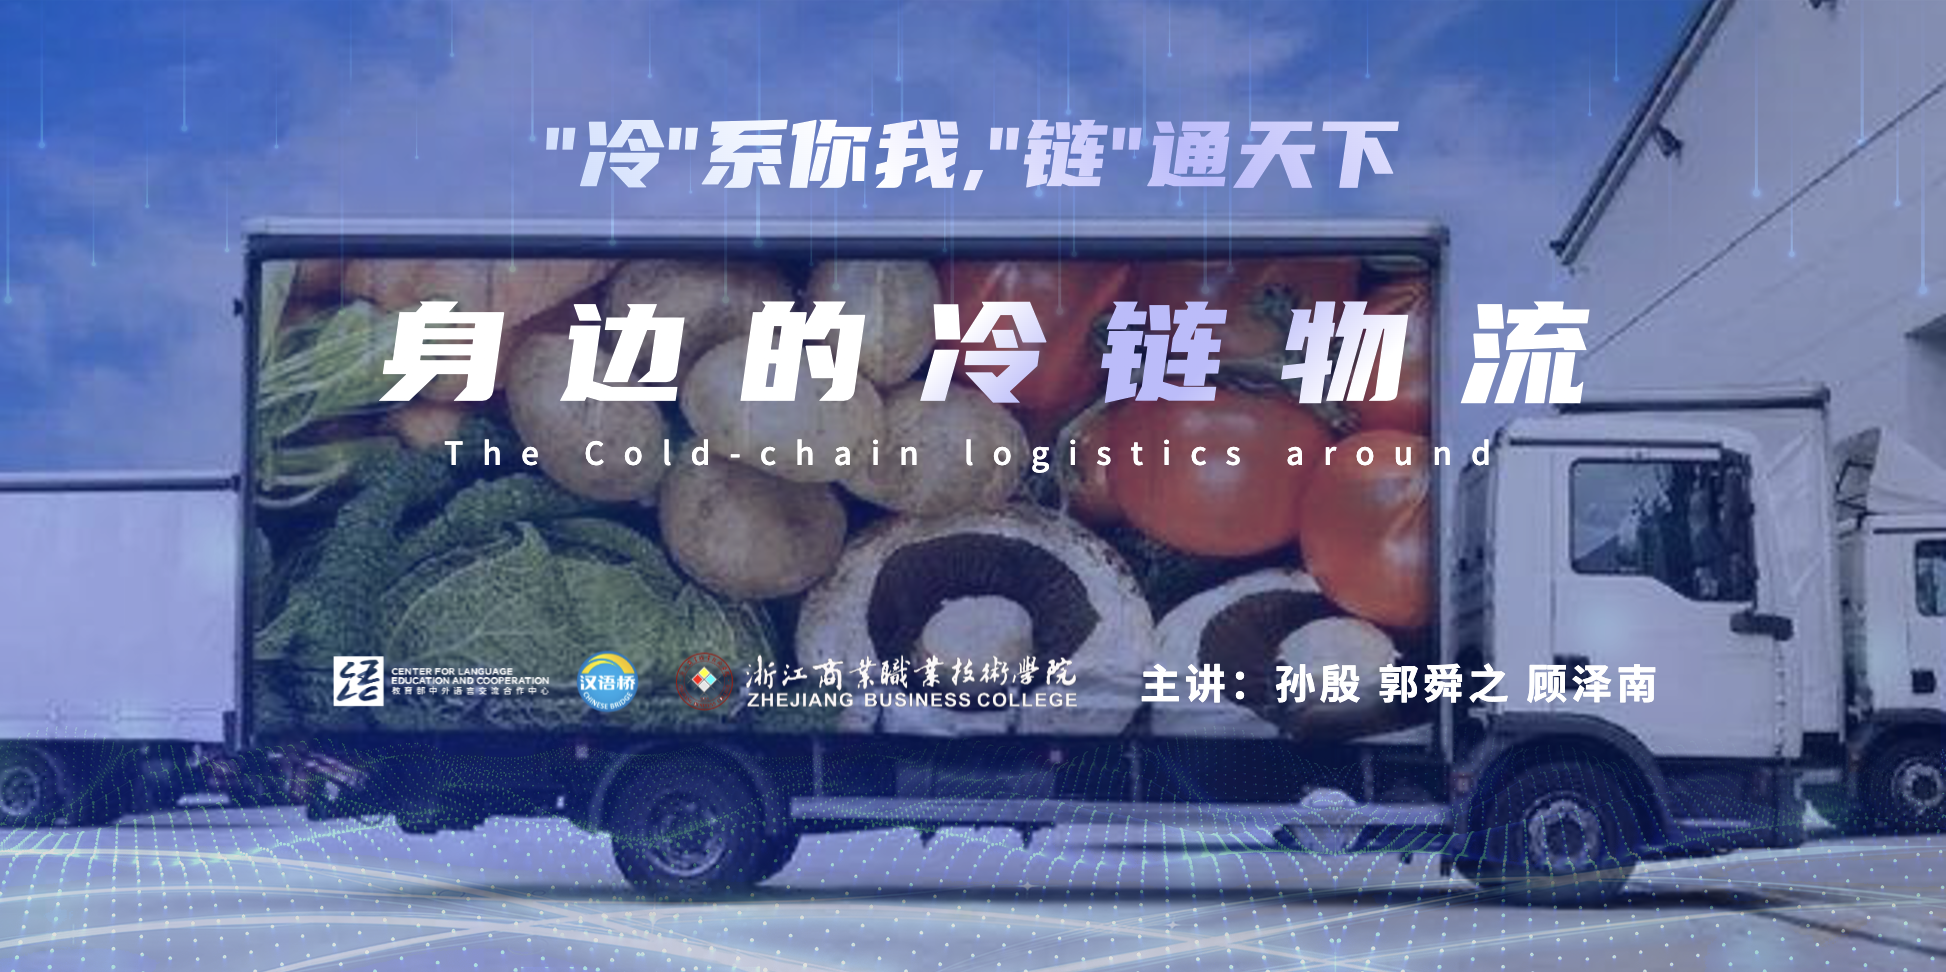 The Cold-chain logistics around